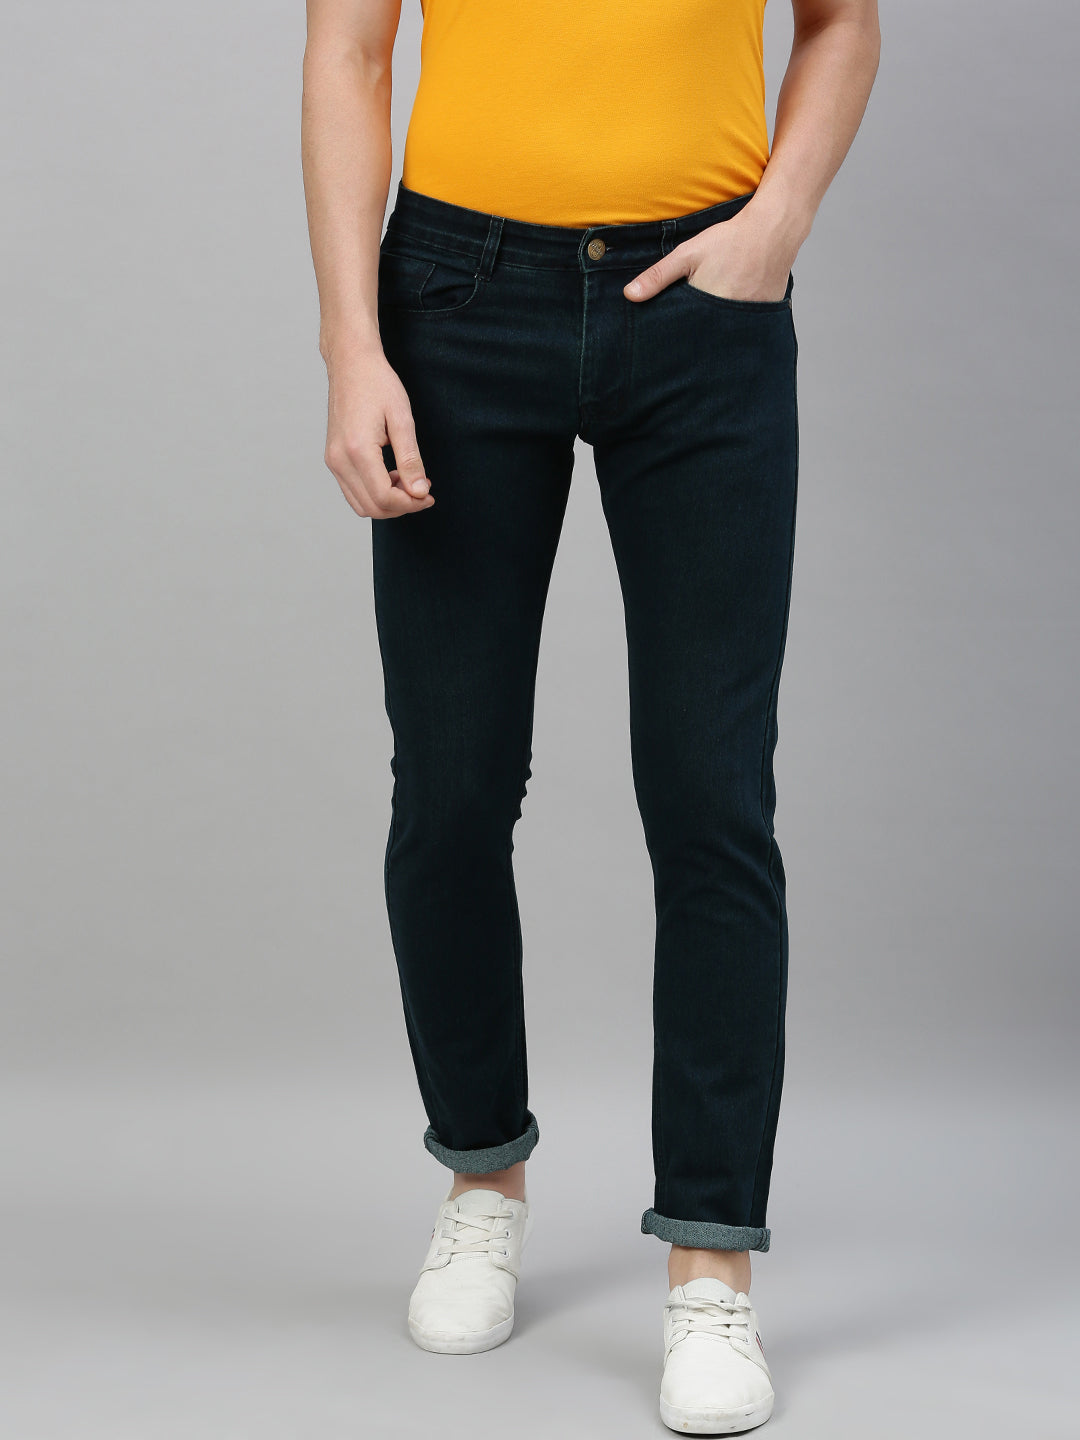 Urbano Fashion Men's Green Slim Fit Stretchable Jeans